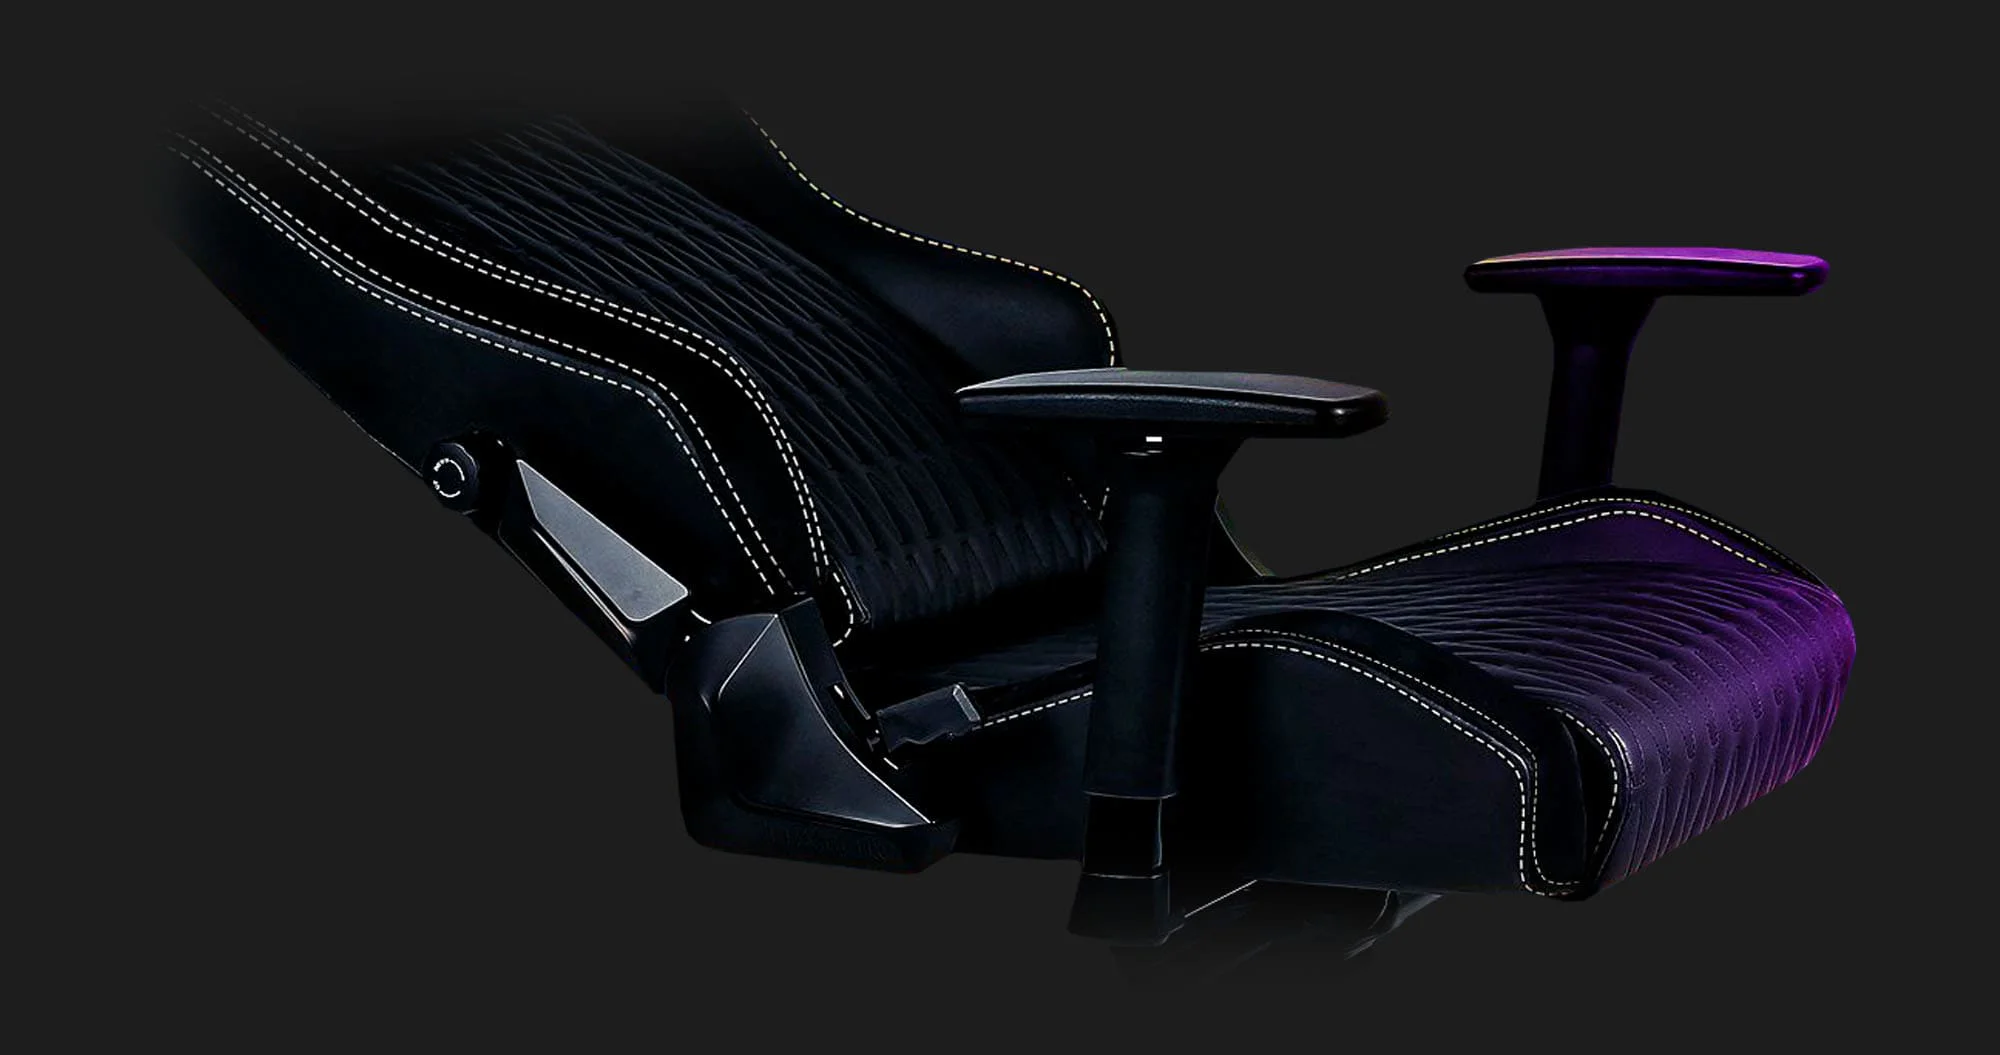 Крісло для геймерів HATOR Ironsky Fabric (Black)